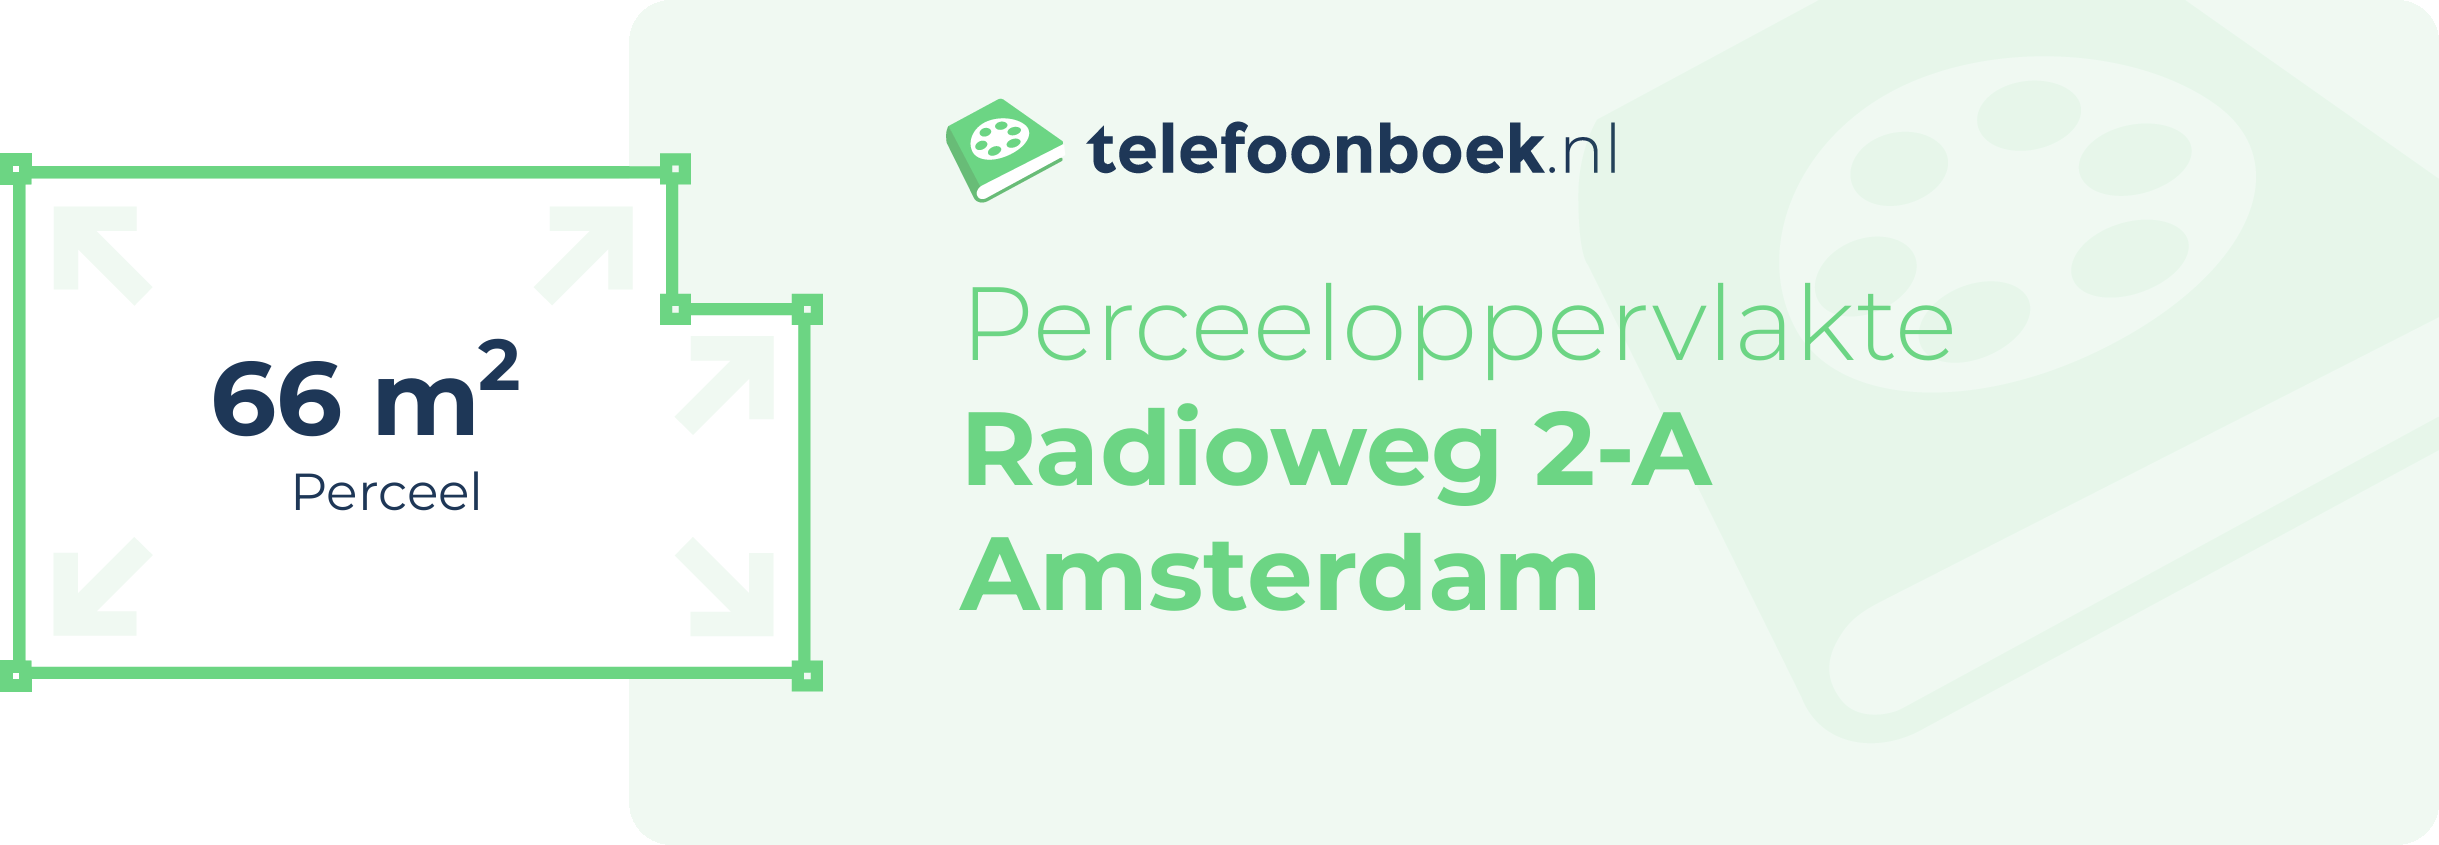 Perceeloppervlakte Radioweg 2-A Amsterdam